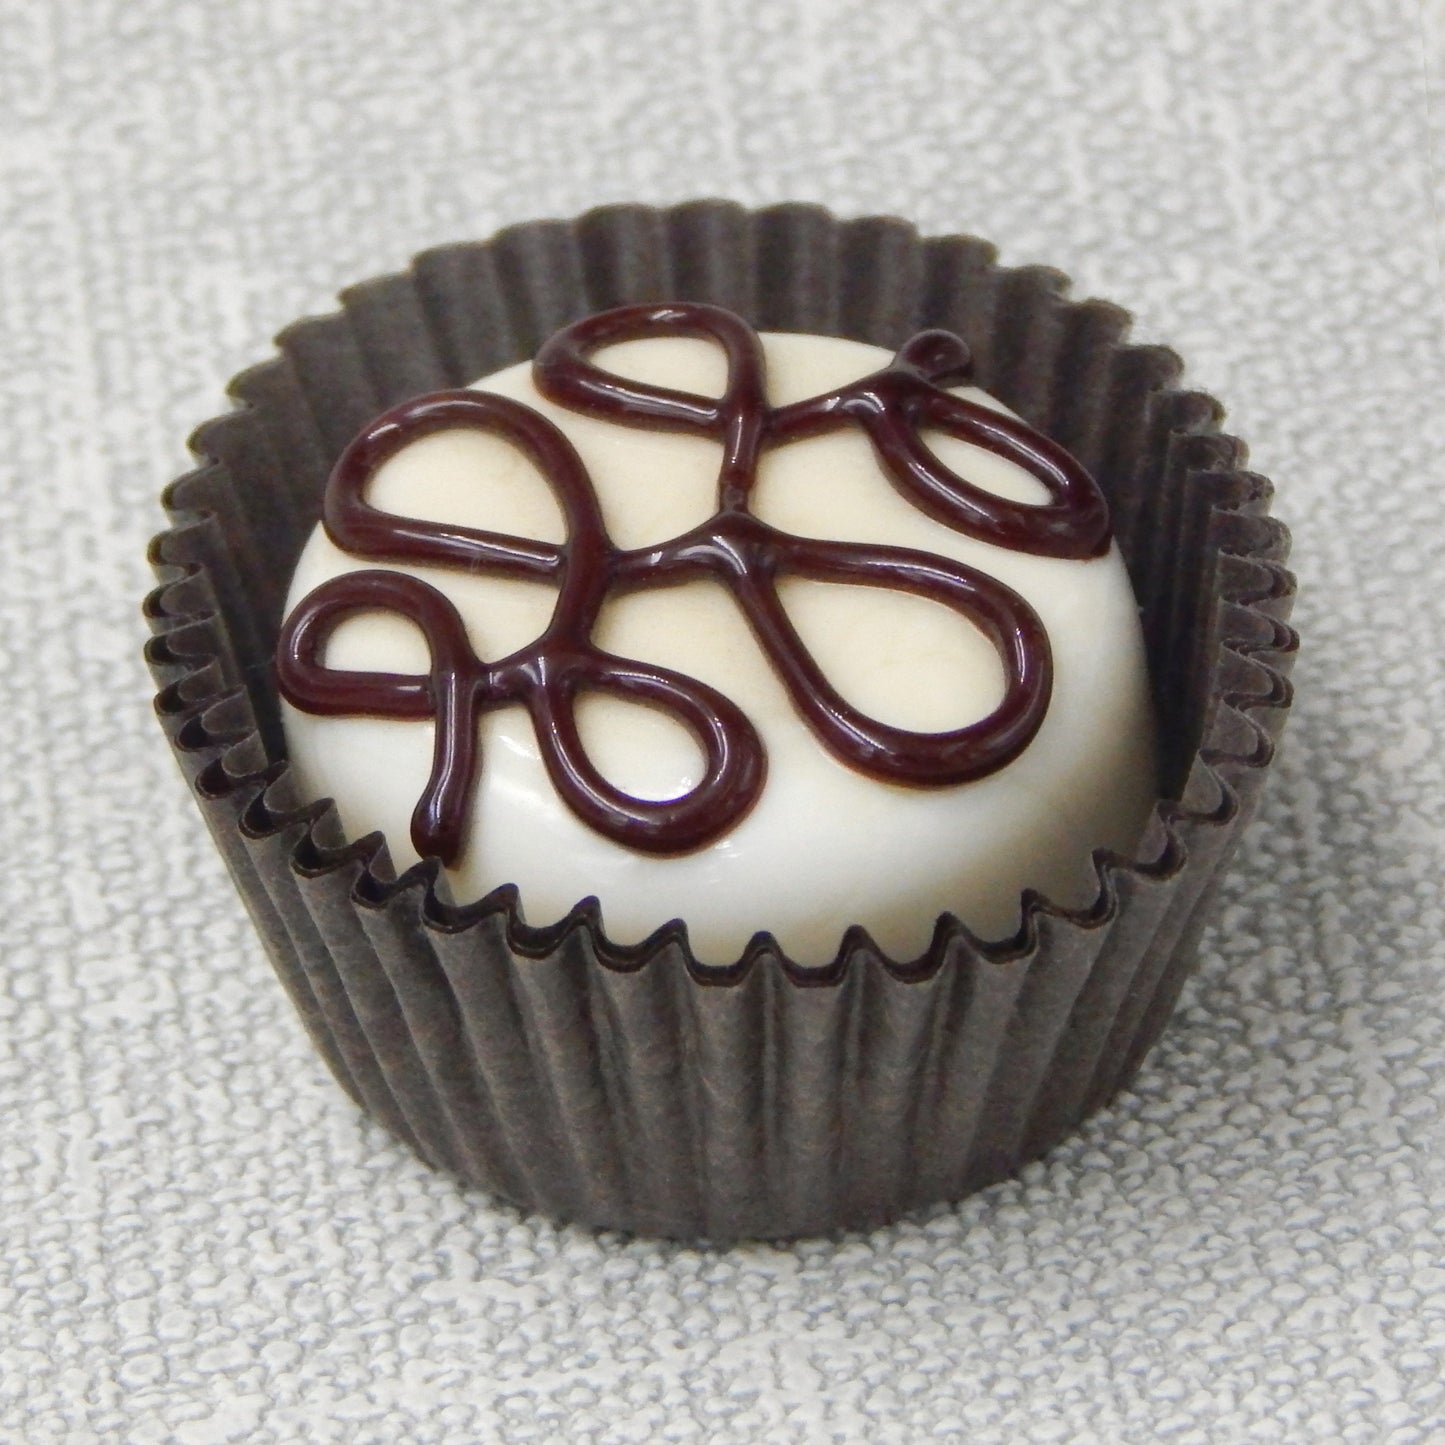 Chocolate Treat with Loop Design (16-040+)